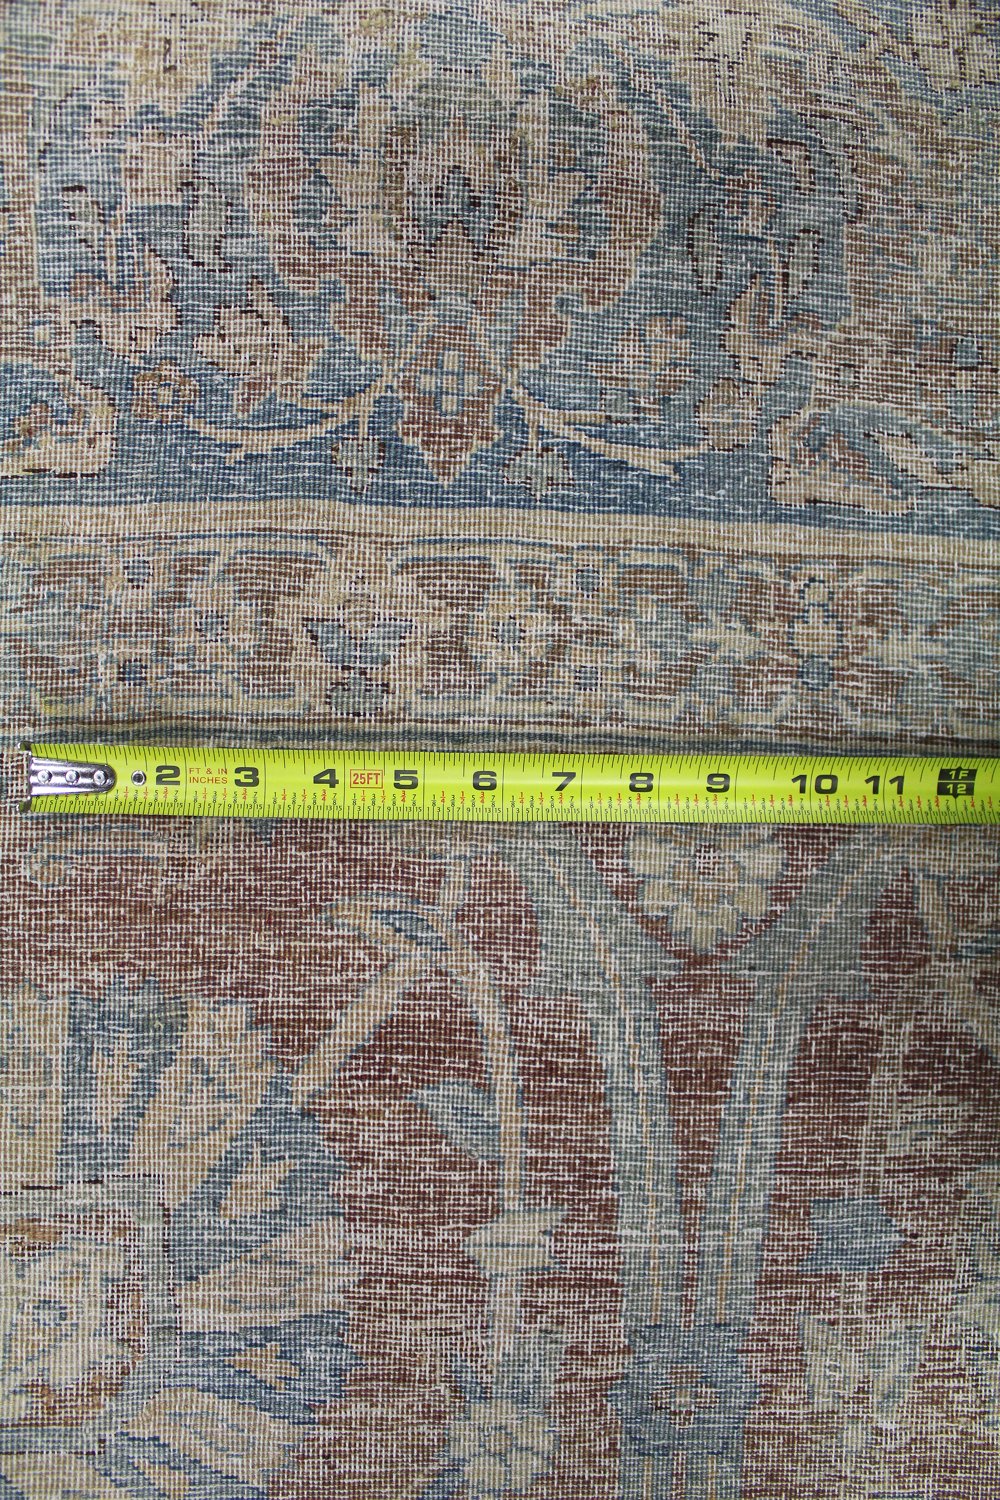 Antique Lavar Kerman Handwoven Traditional Rug, JF8063